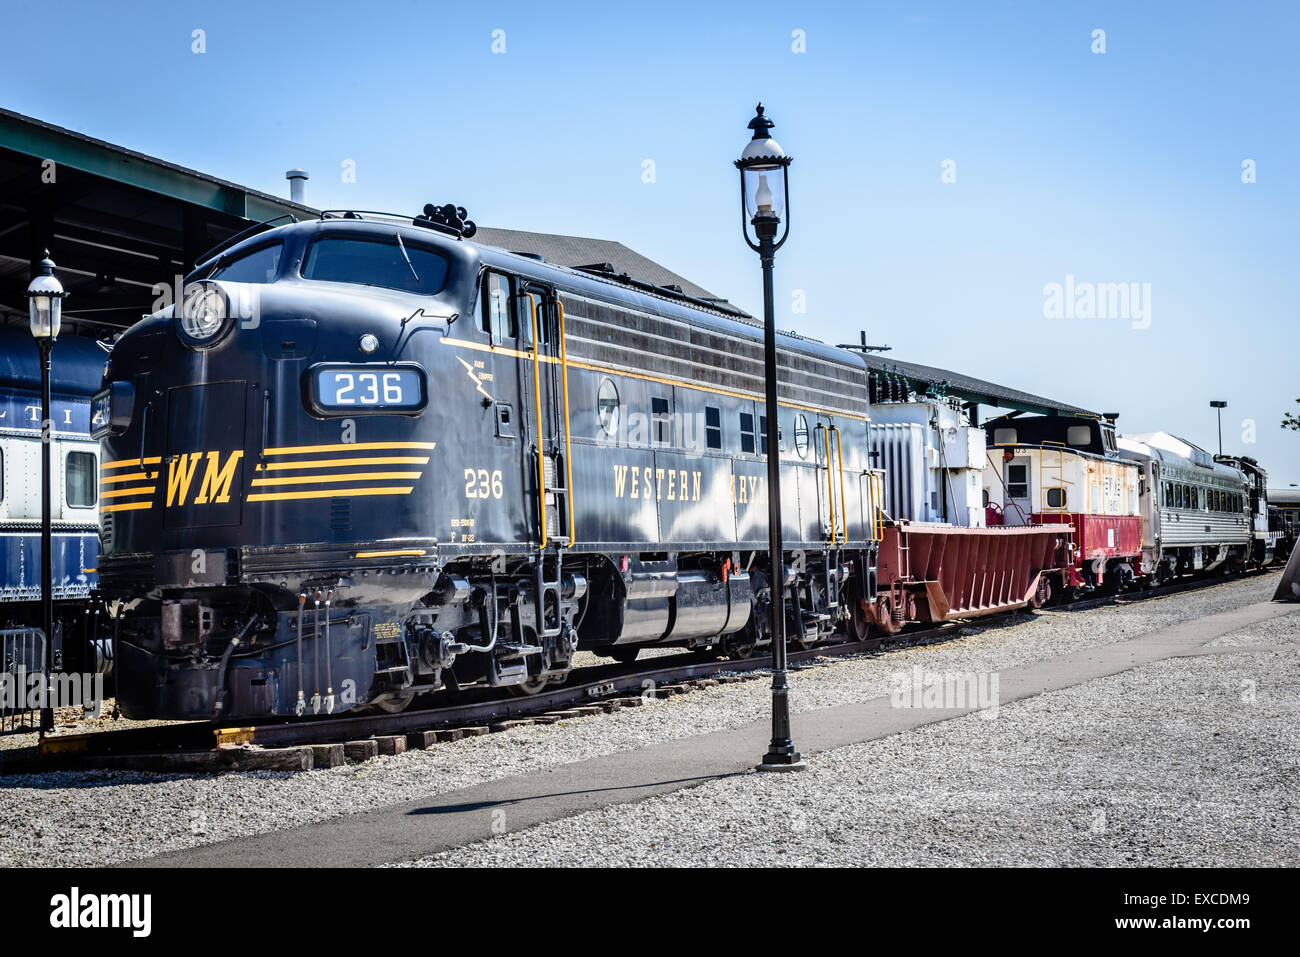 Western Maryland F7 A-unit No 236, Baltimore & Ohio Railroad Museum, 901 West Pratt Street, Baltimore, MD Stock Photo